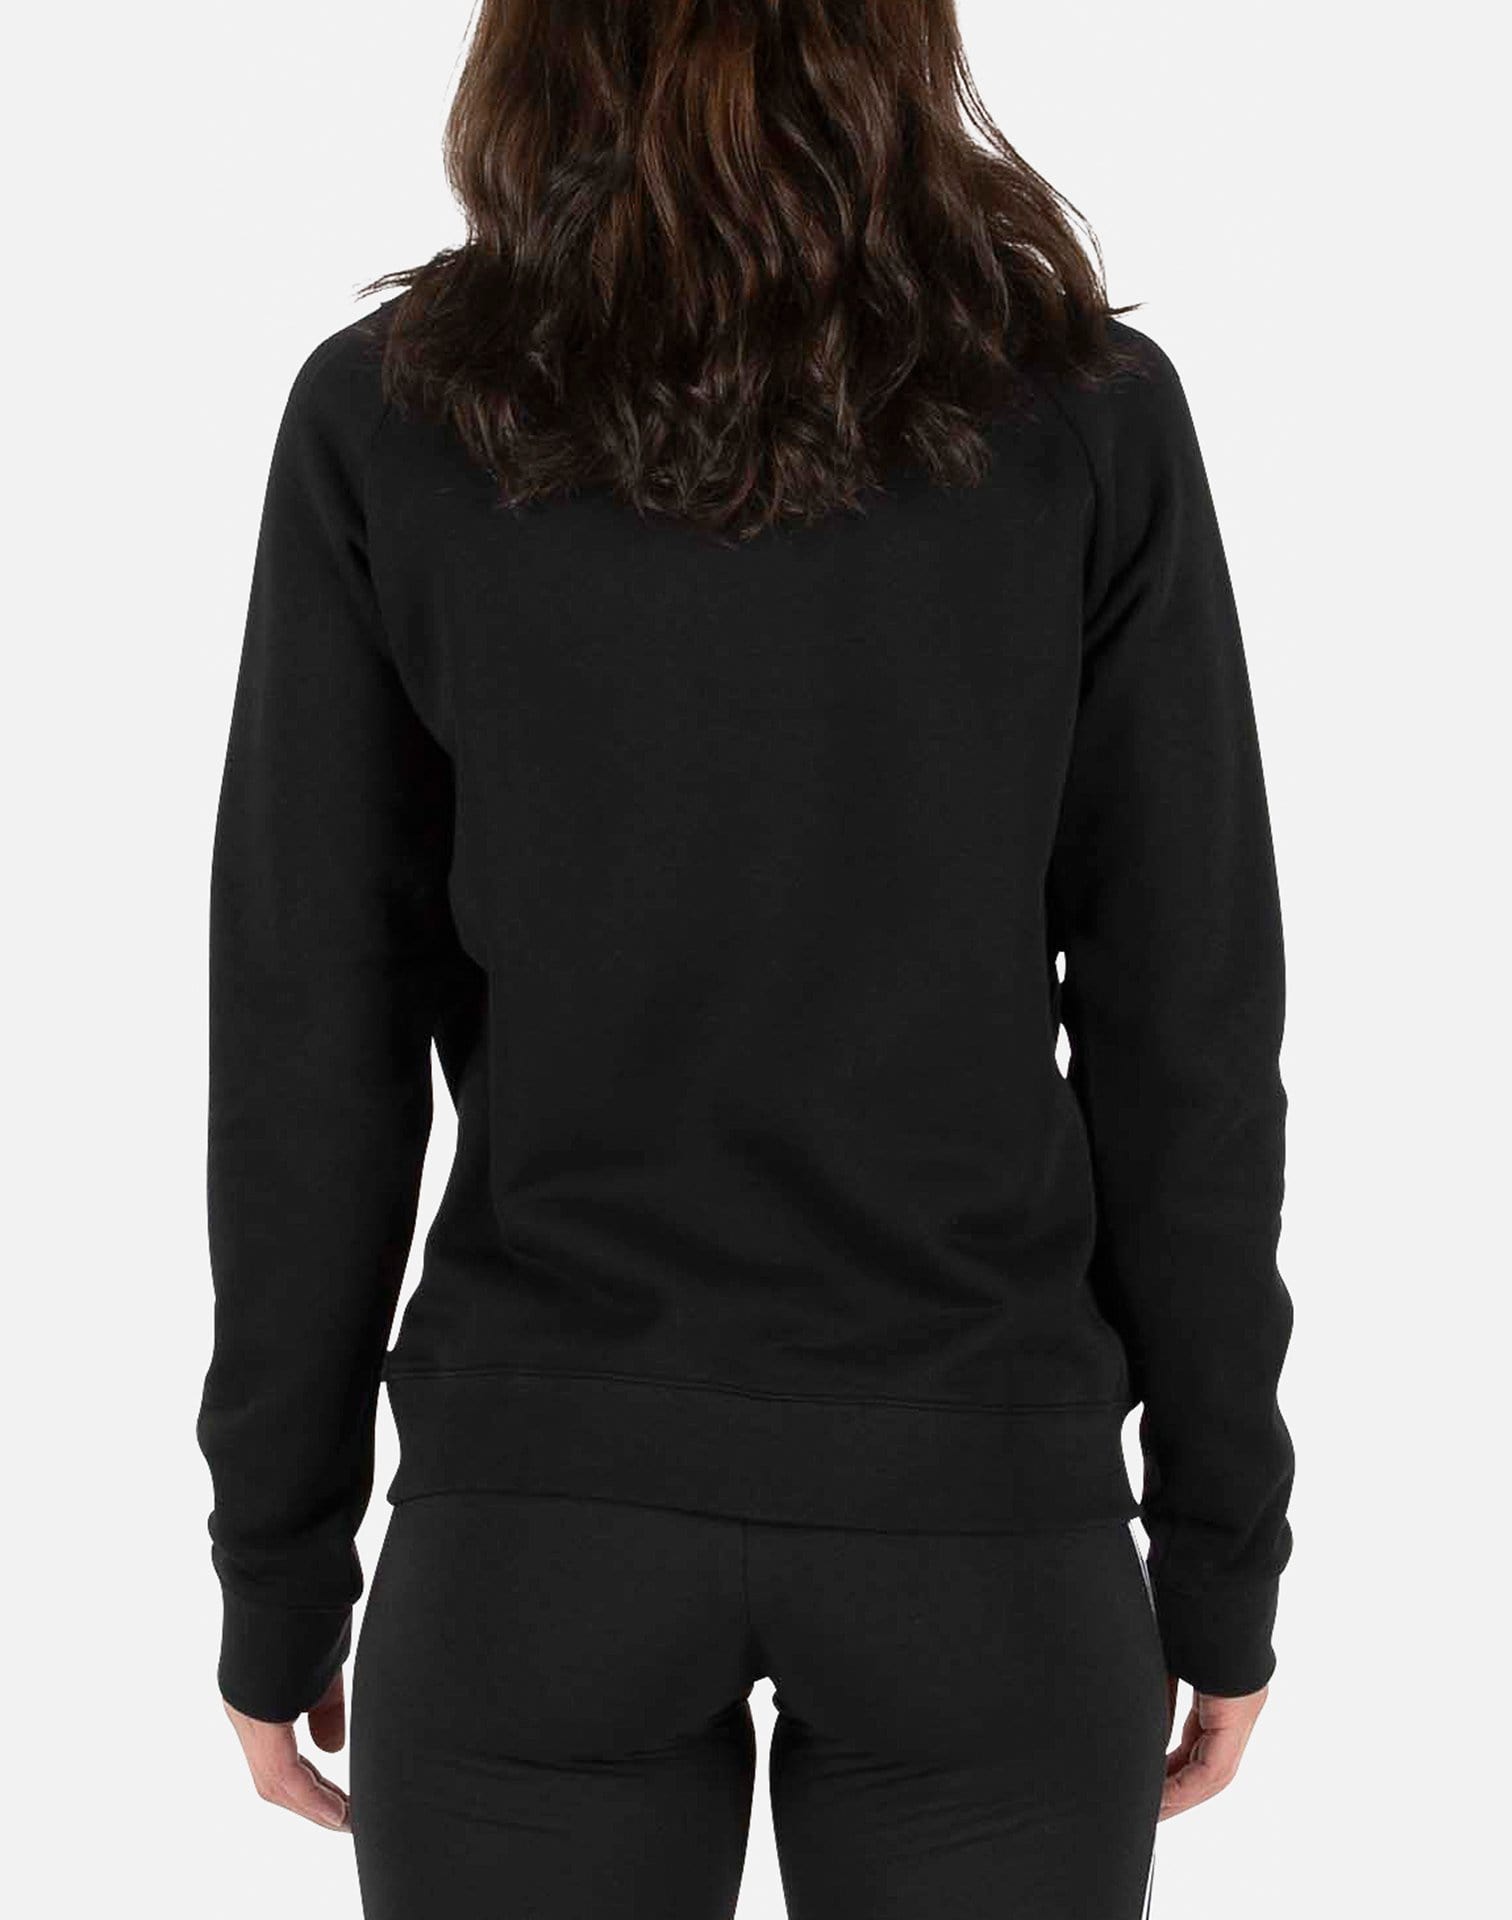 adidas Women's Trefoil Crewneck Sweatshirt